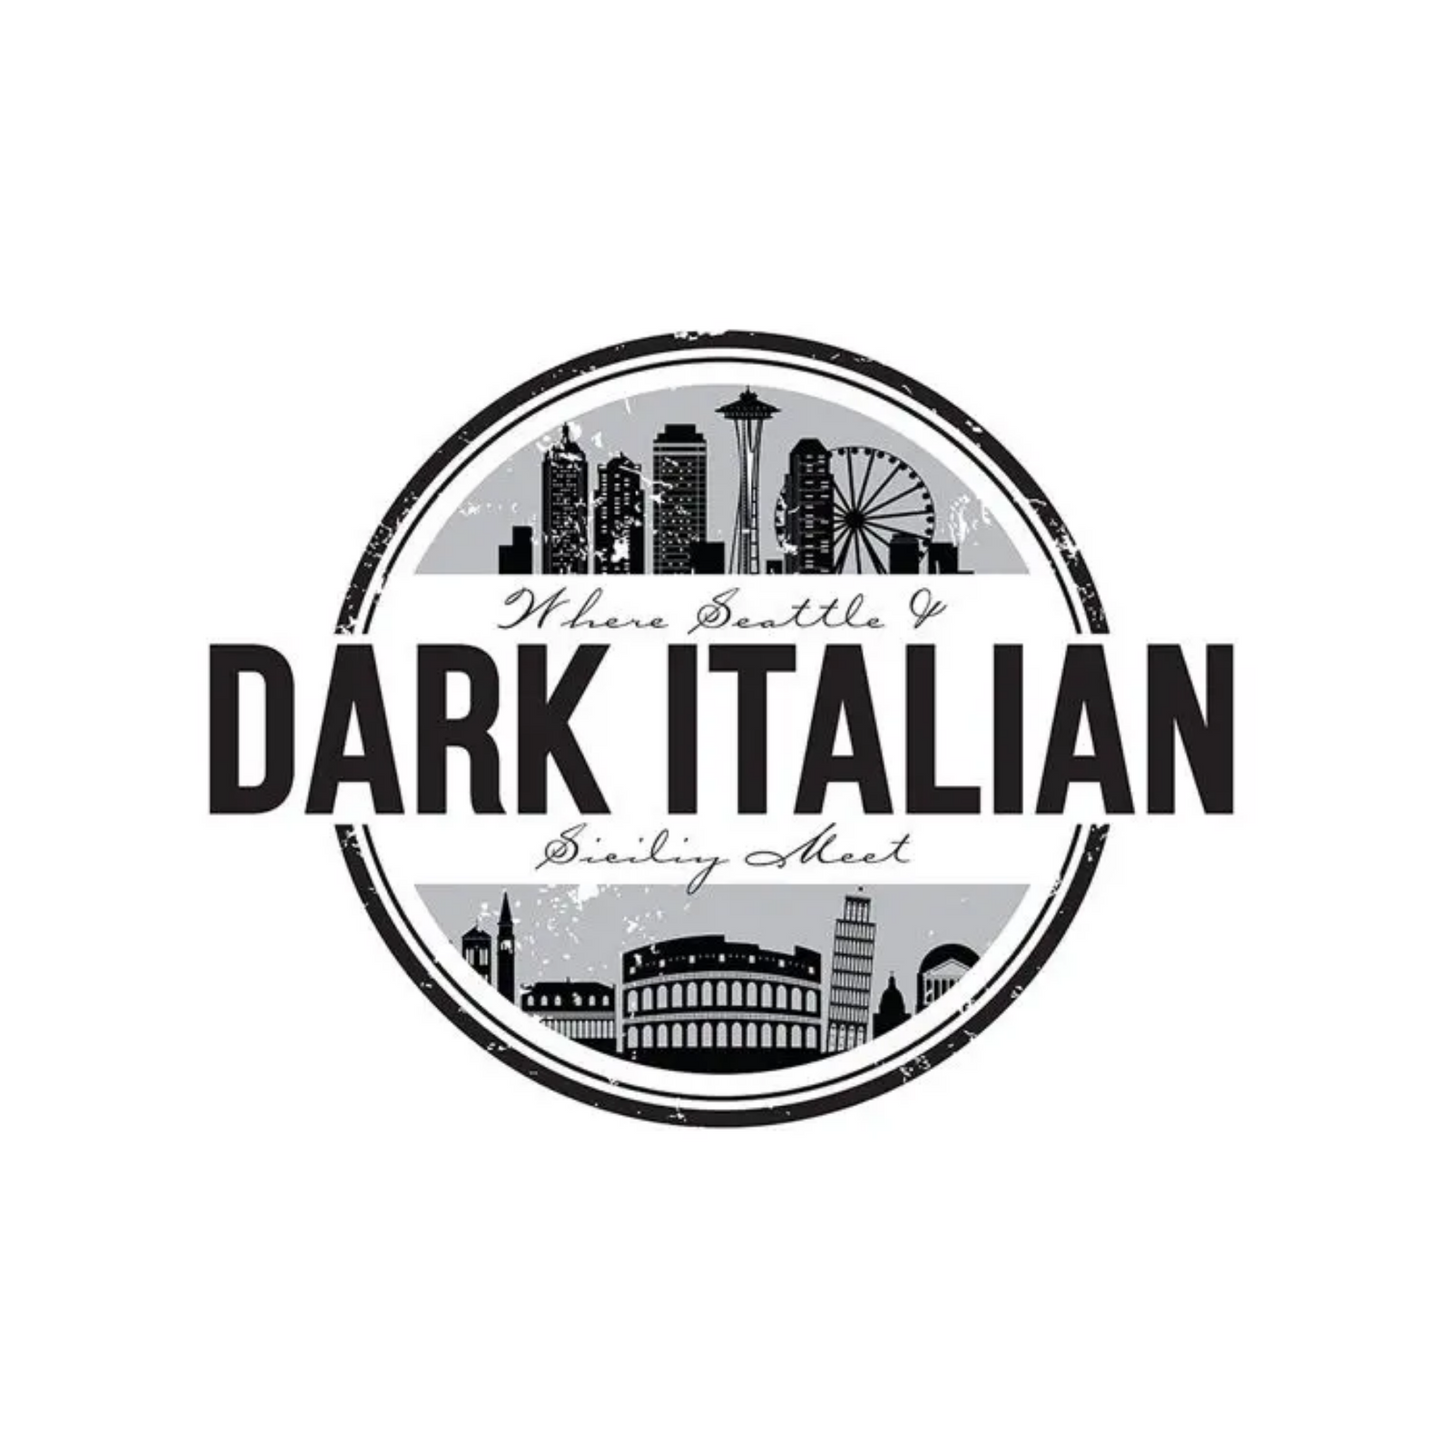 Dark Italian Blend, dark roast coffee